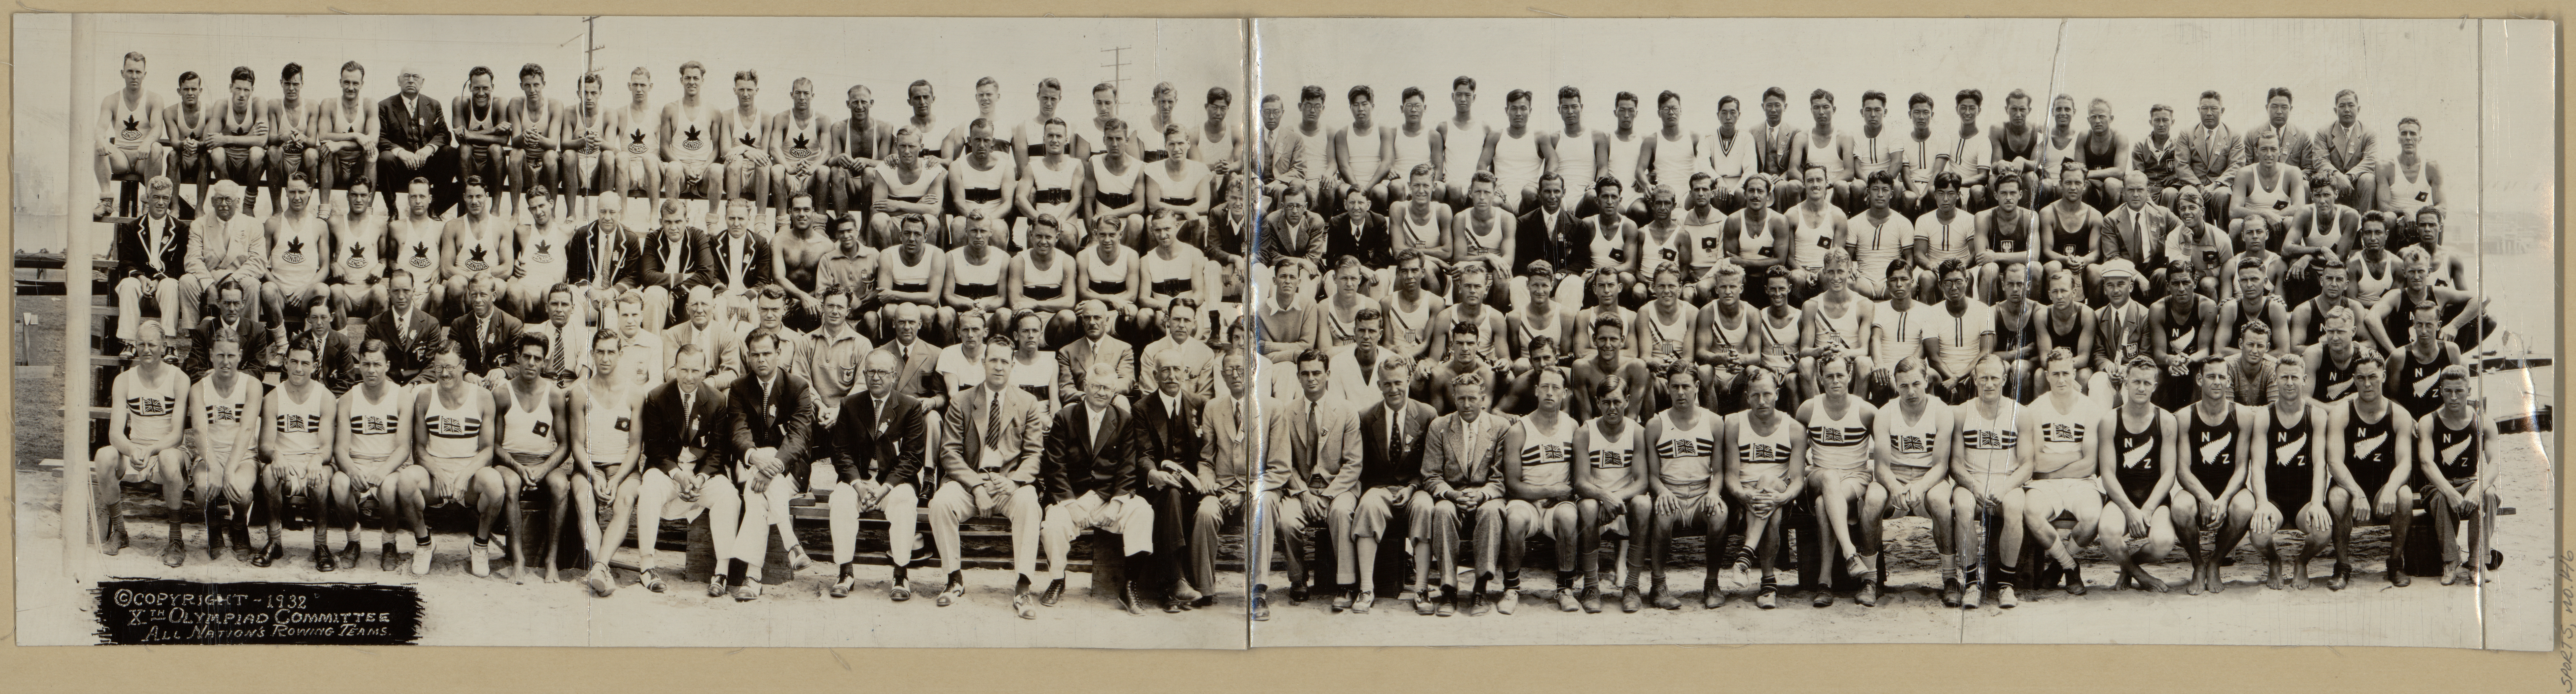 1932 Summer Olympics rowing team photo